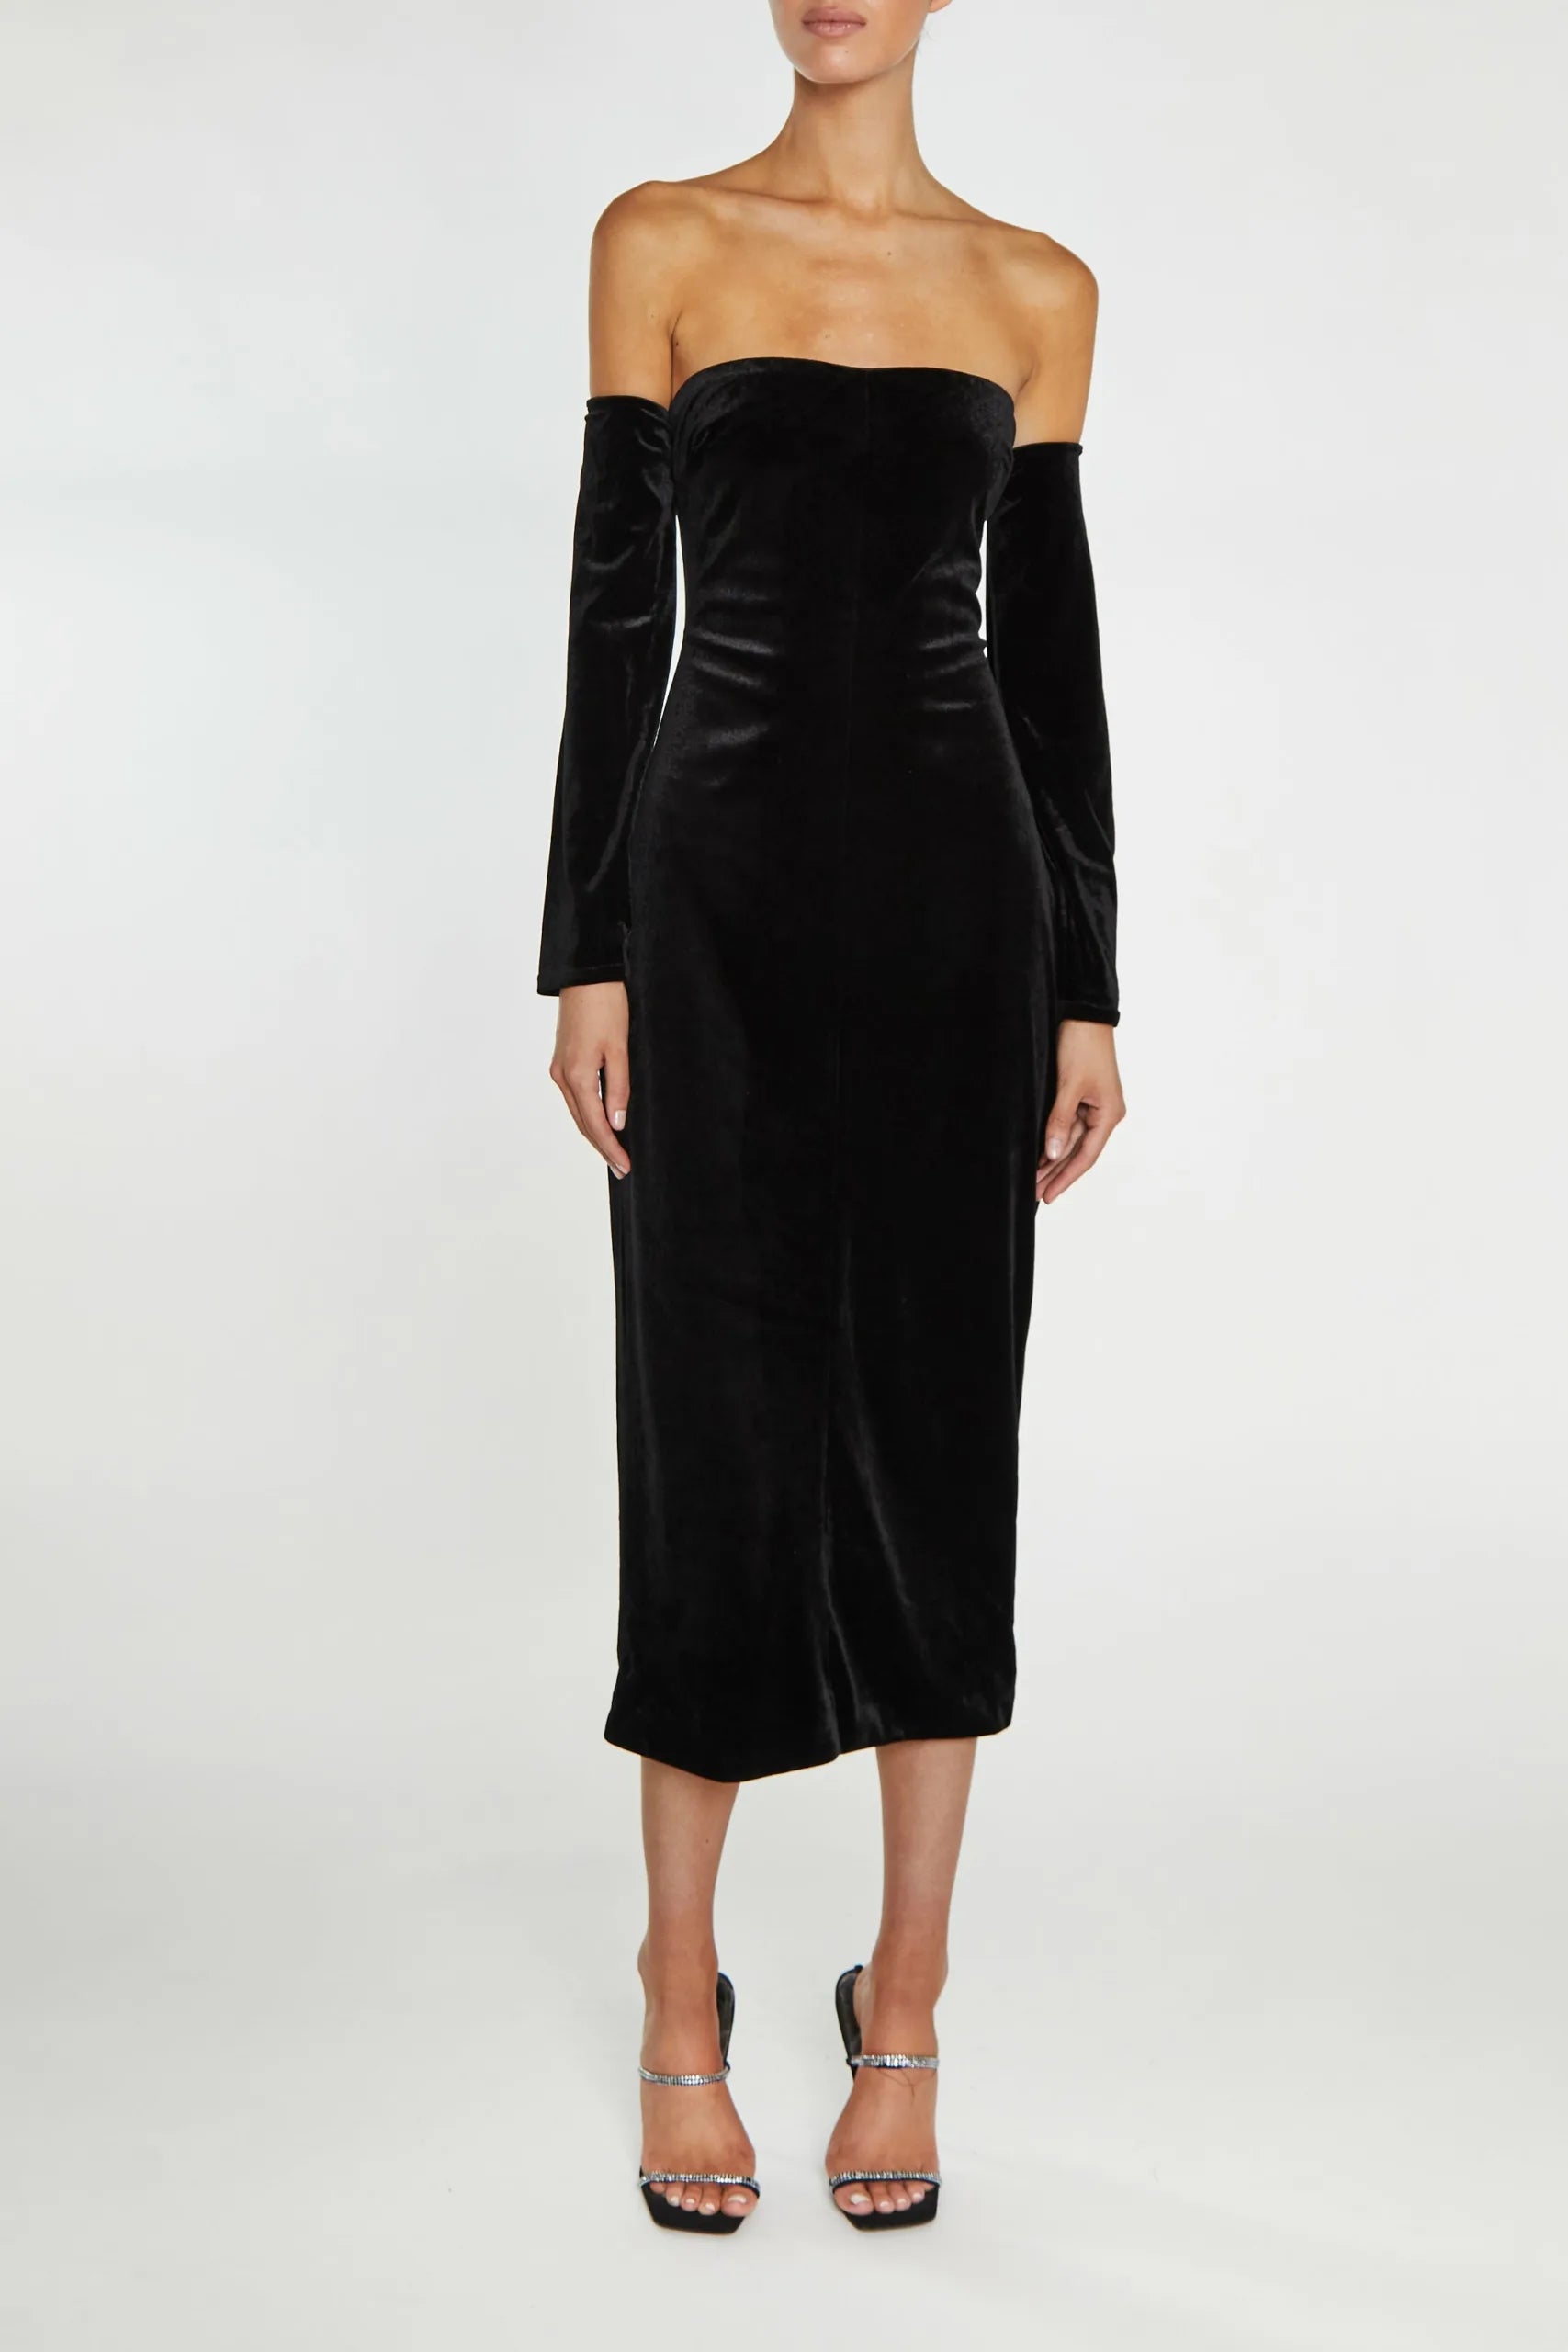 True Decadence Zoe Black Bardot Fitted Midi Dress